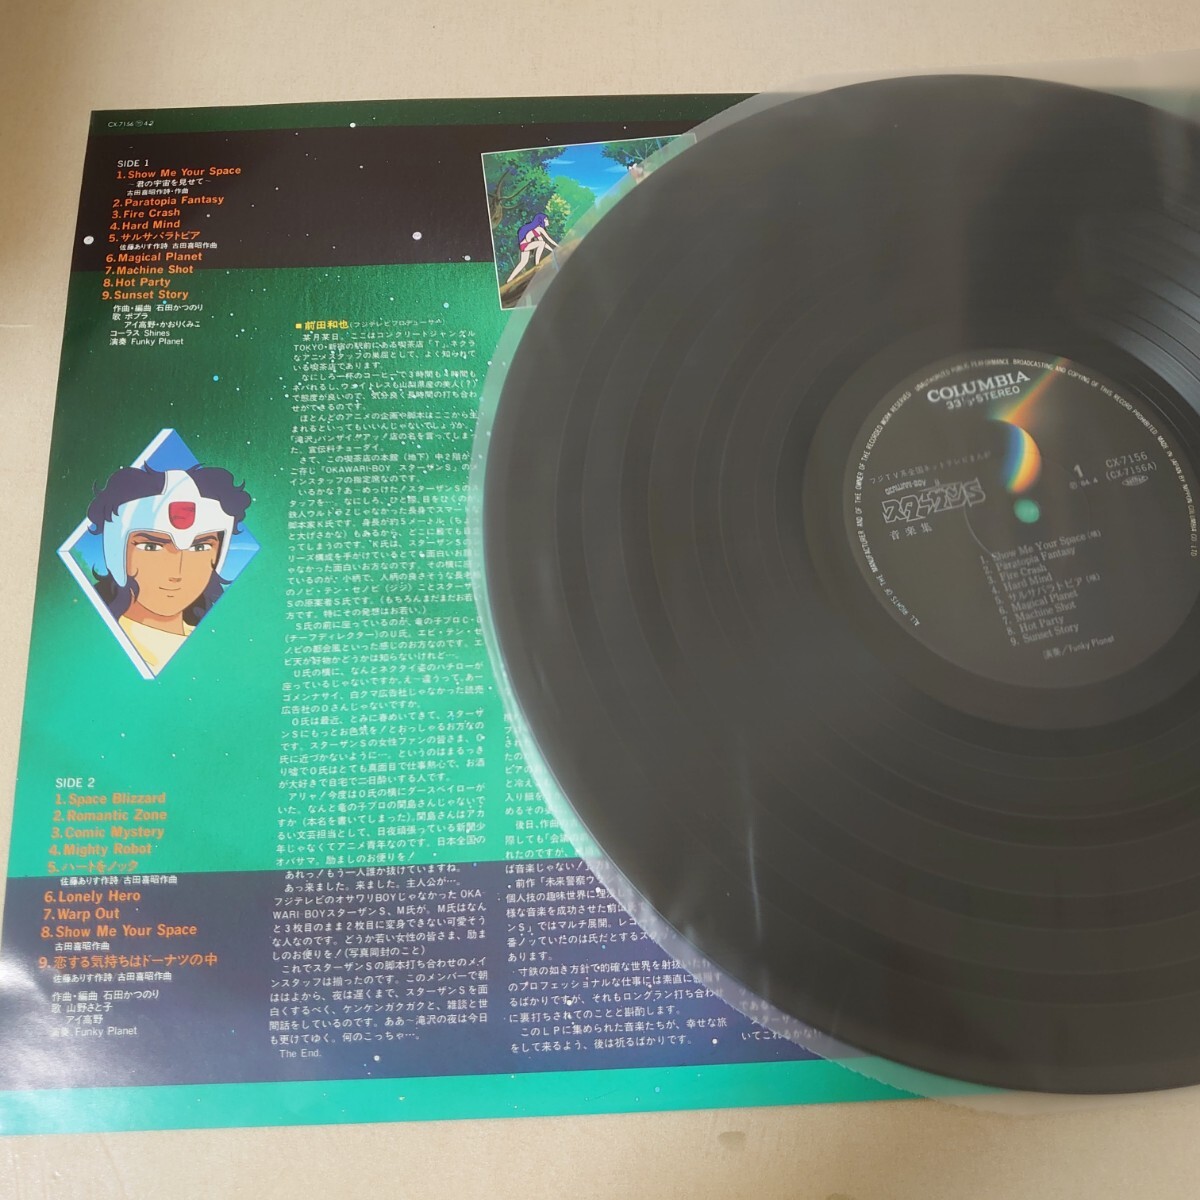 LP*po pra, I Kouya,. клетка ... др. /s Tarzan S музыка сборник [OKAWARI-BOY/CX-7156/1984 год ]